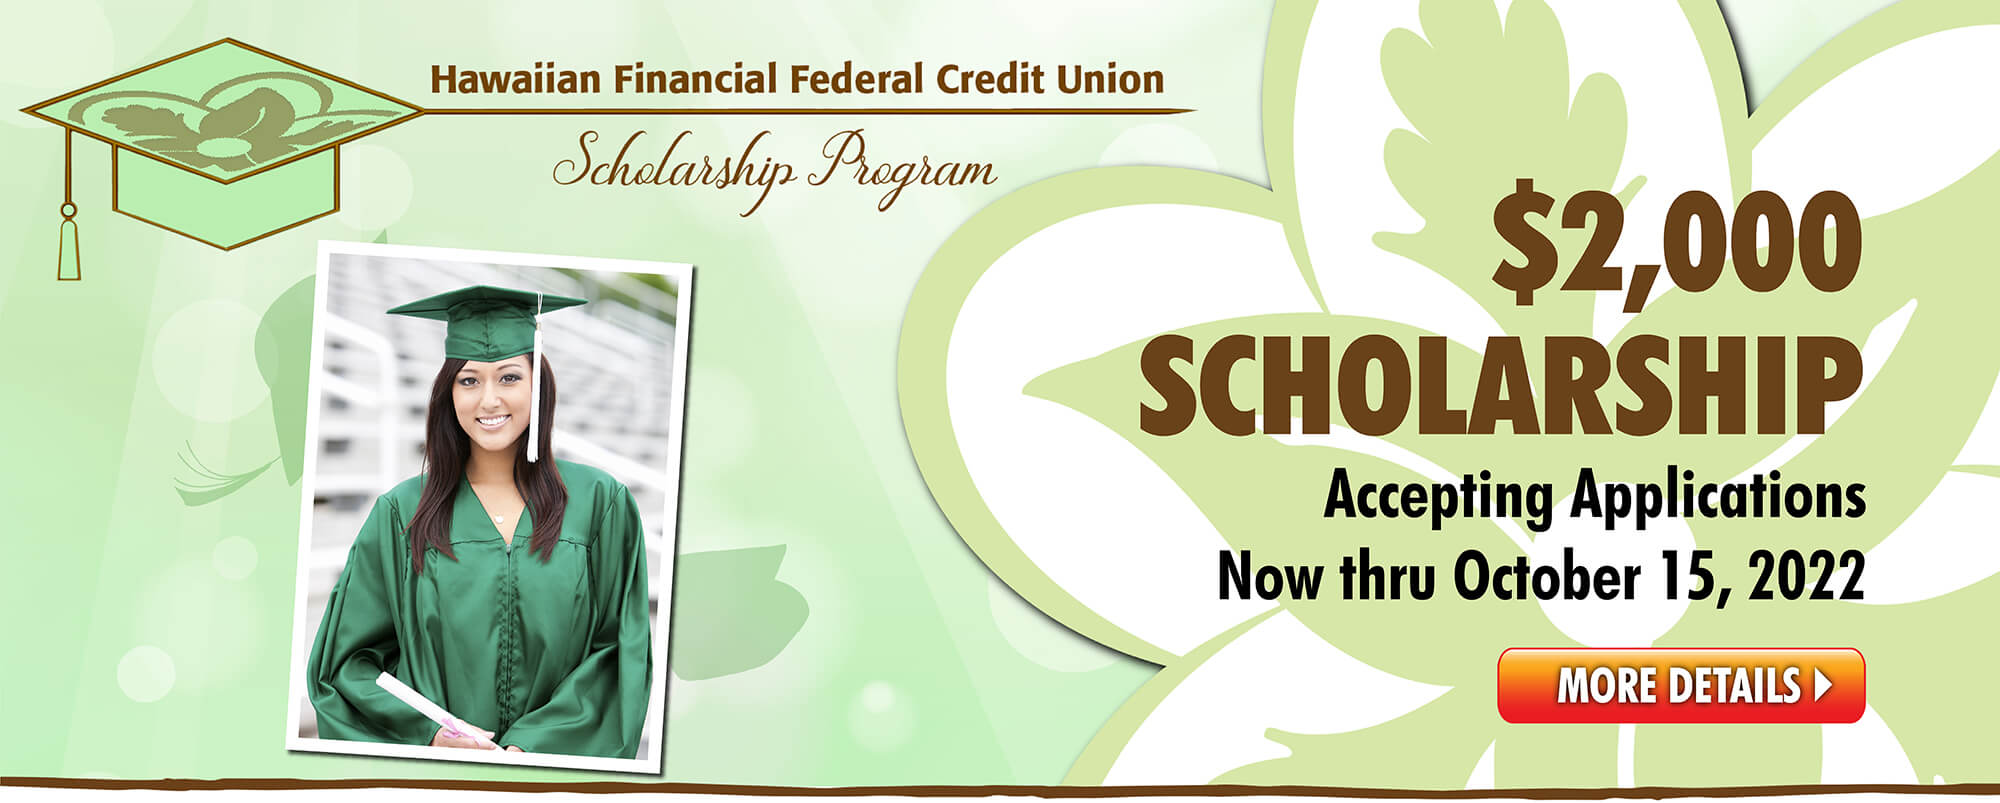 Hawaiian Financial Federal Credit Union Scholarship Program. $2,000 Scholarship Accepting Applications new thru October 15, 2022. More Details